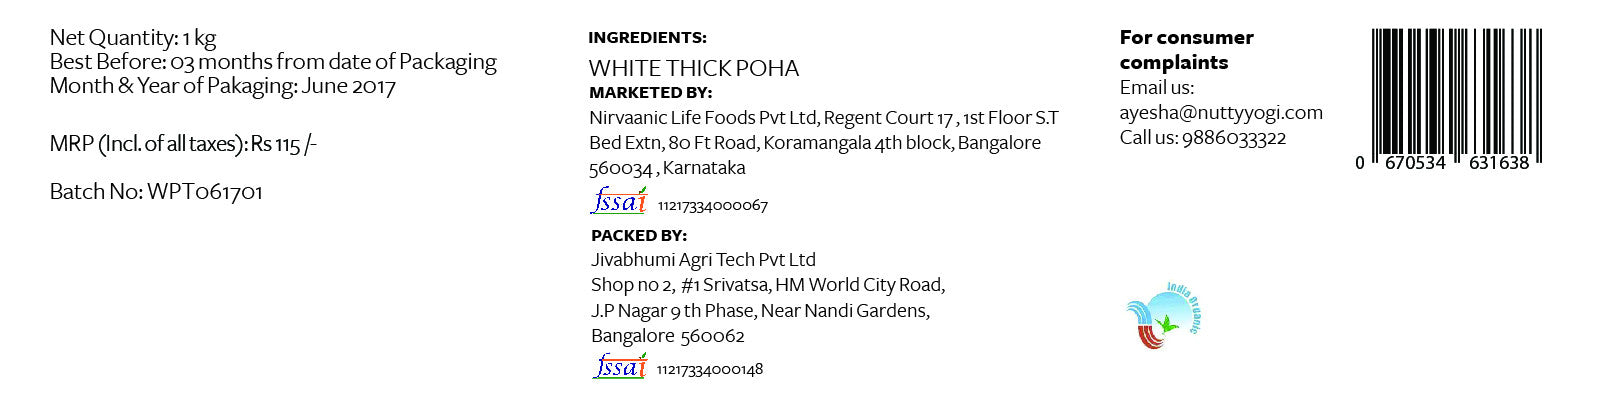 Organic White Thick Poha.